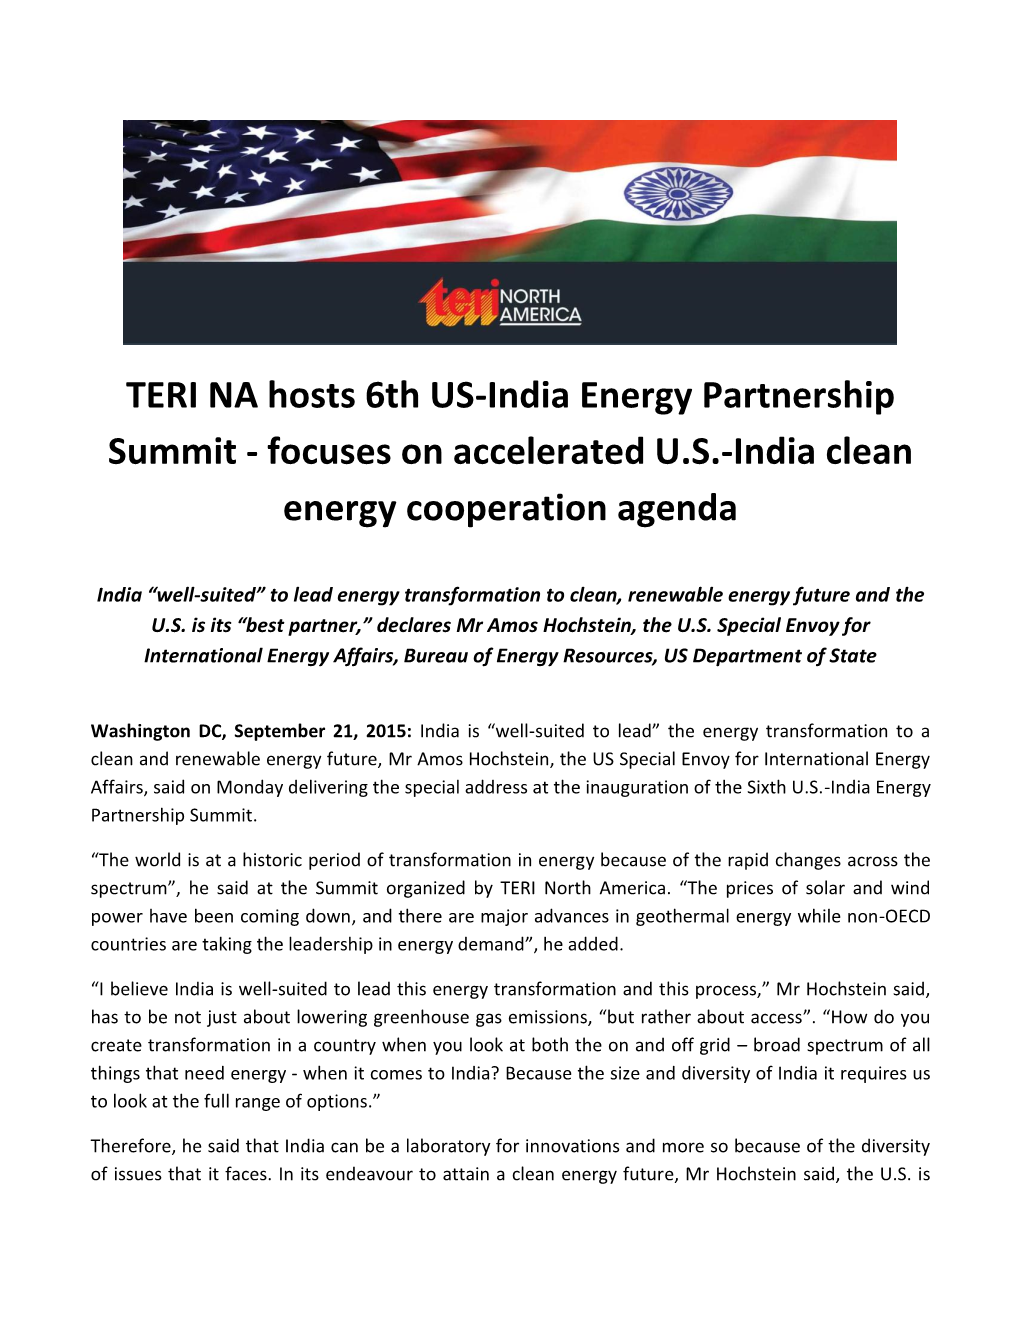 TERI NA Hosts 6Th US-India Energy Partnership Summit - Focuses on Accelerated U.S.-India Clean